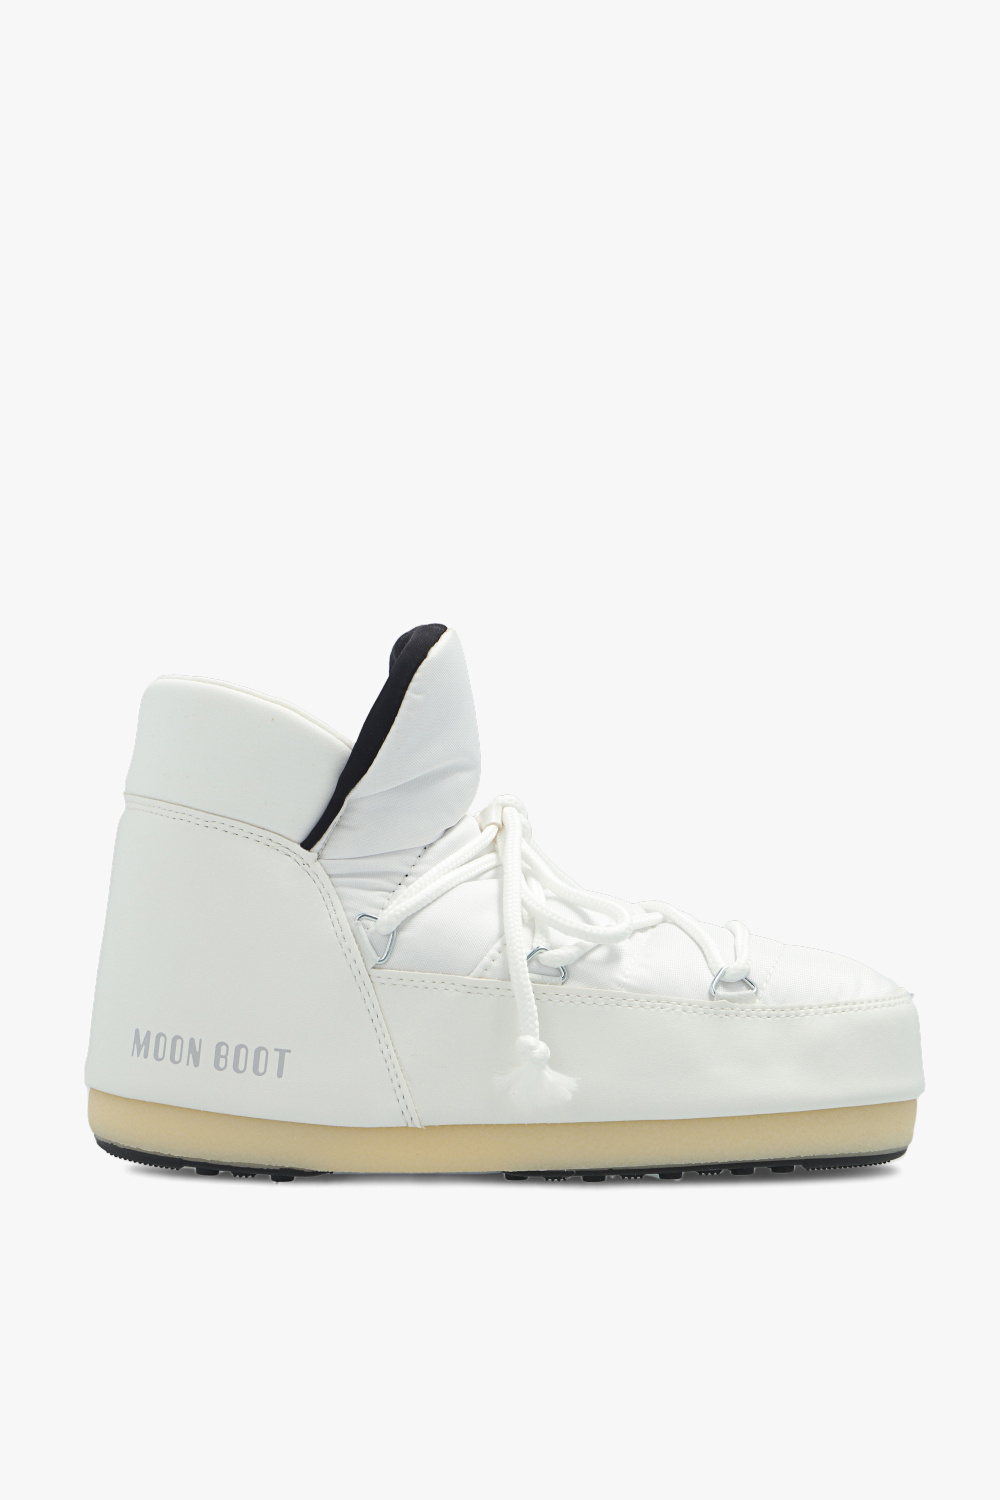 Moon Boot ‘Pumps Nylon’ snow boots